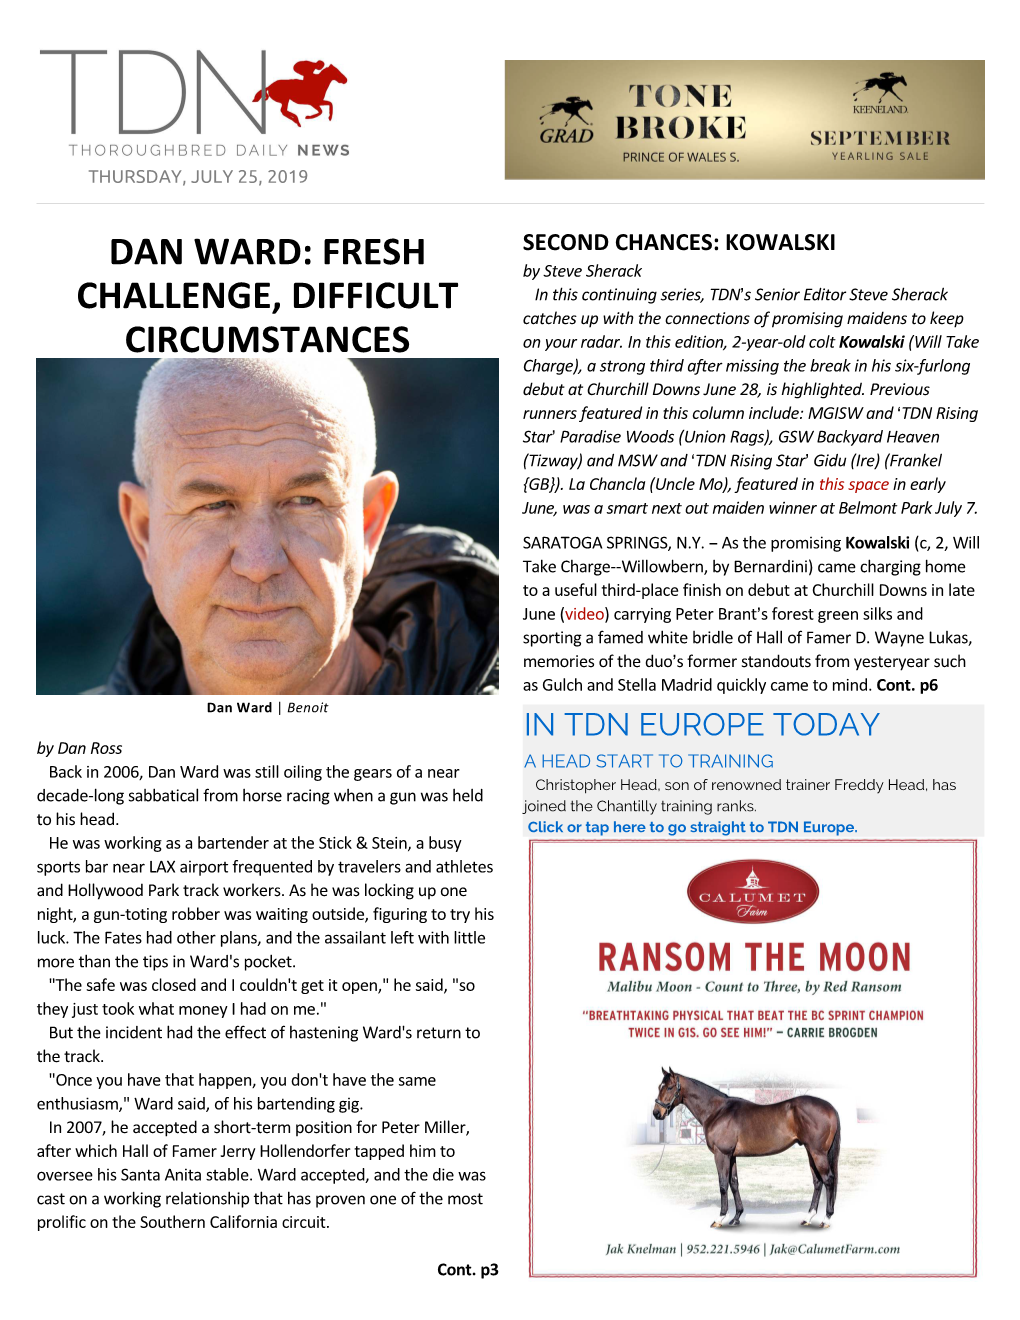 Dan Ward: Fresh Challenge, Difficult Circumstances